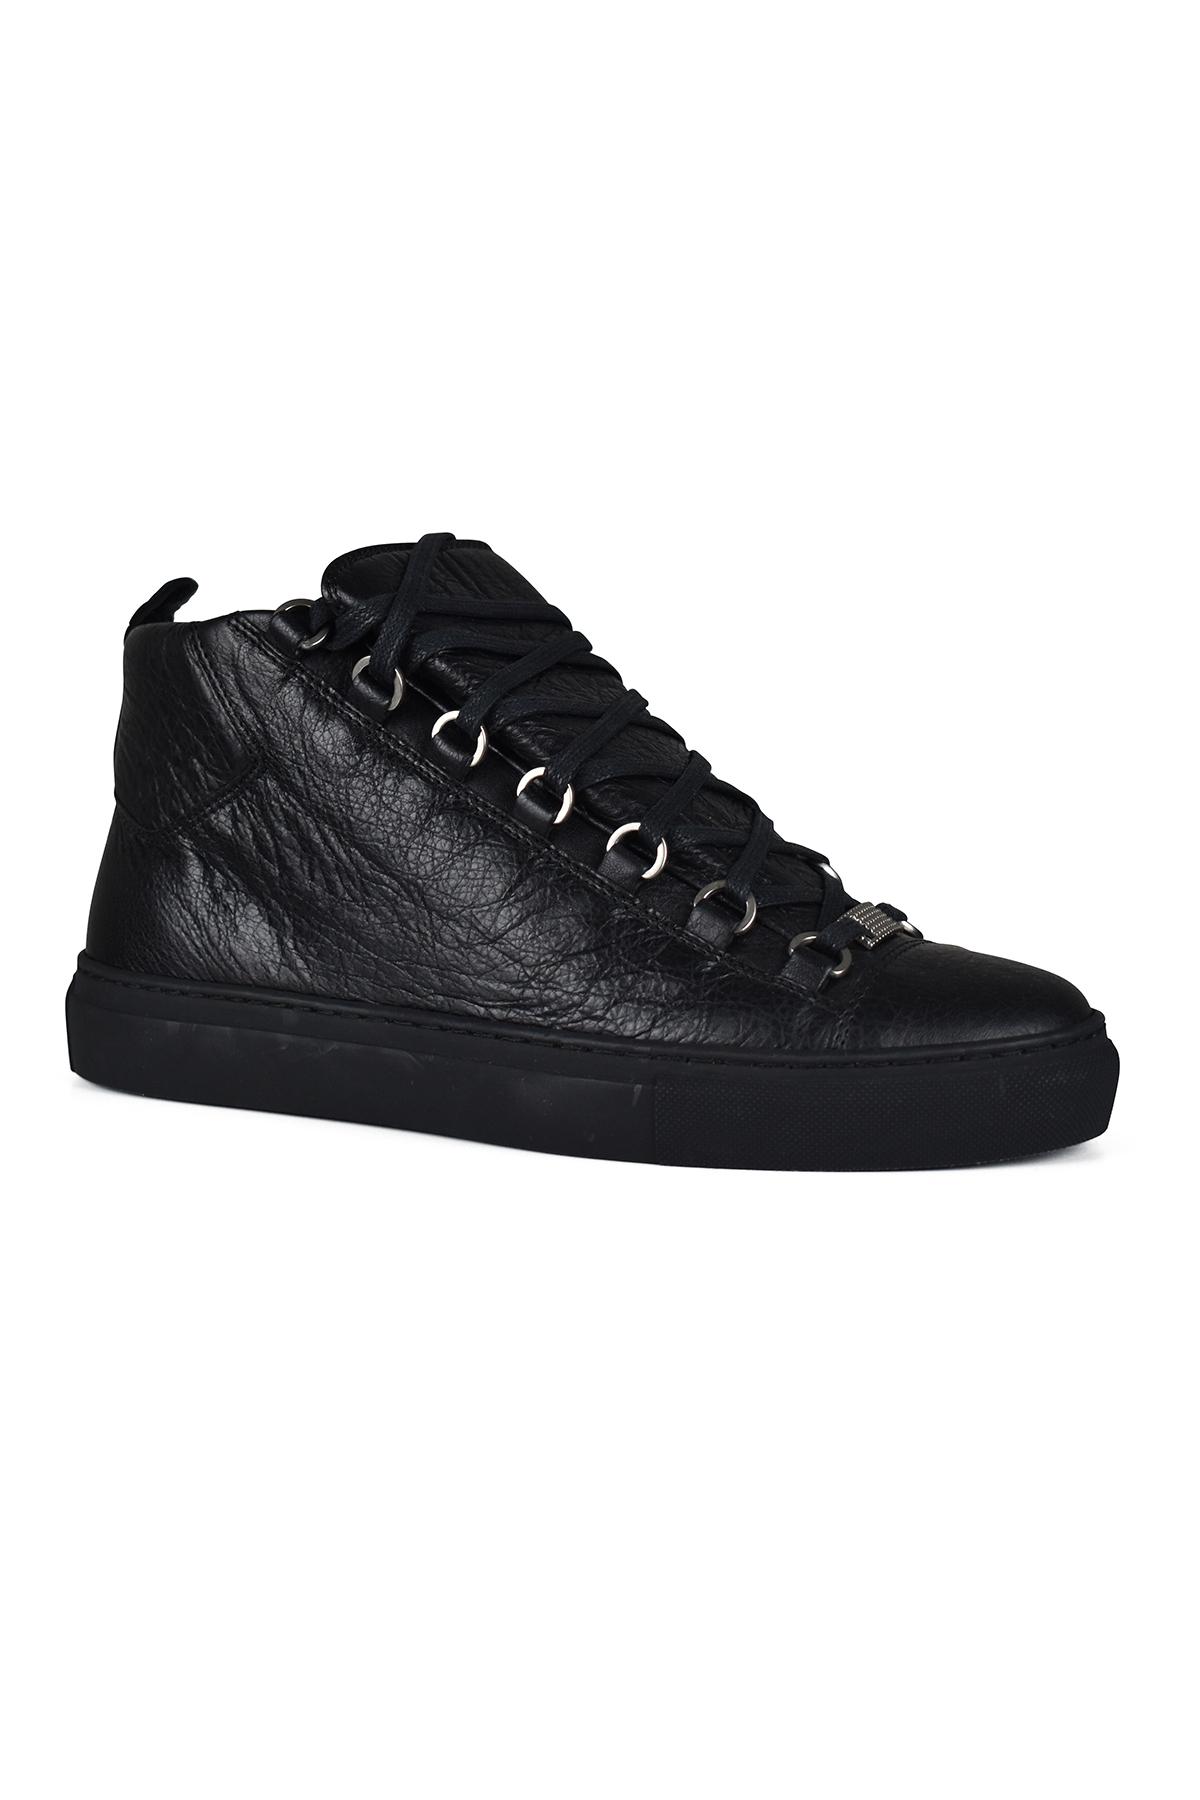 Balenciaga Arena Sneakers in Black | Lyst